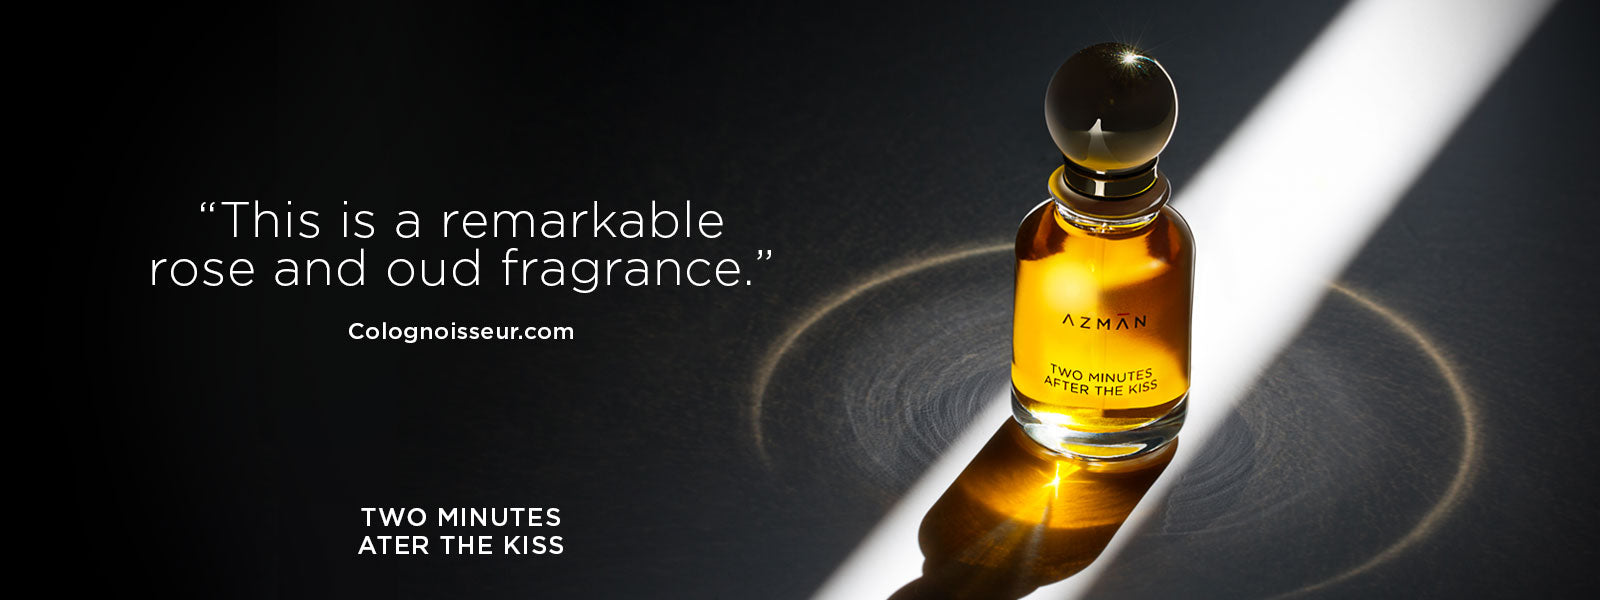 Shop Lv Perfume Sample online